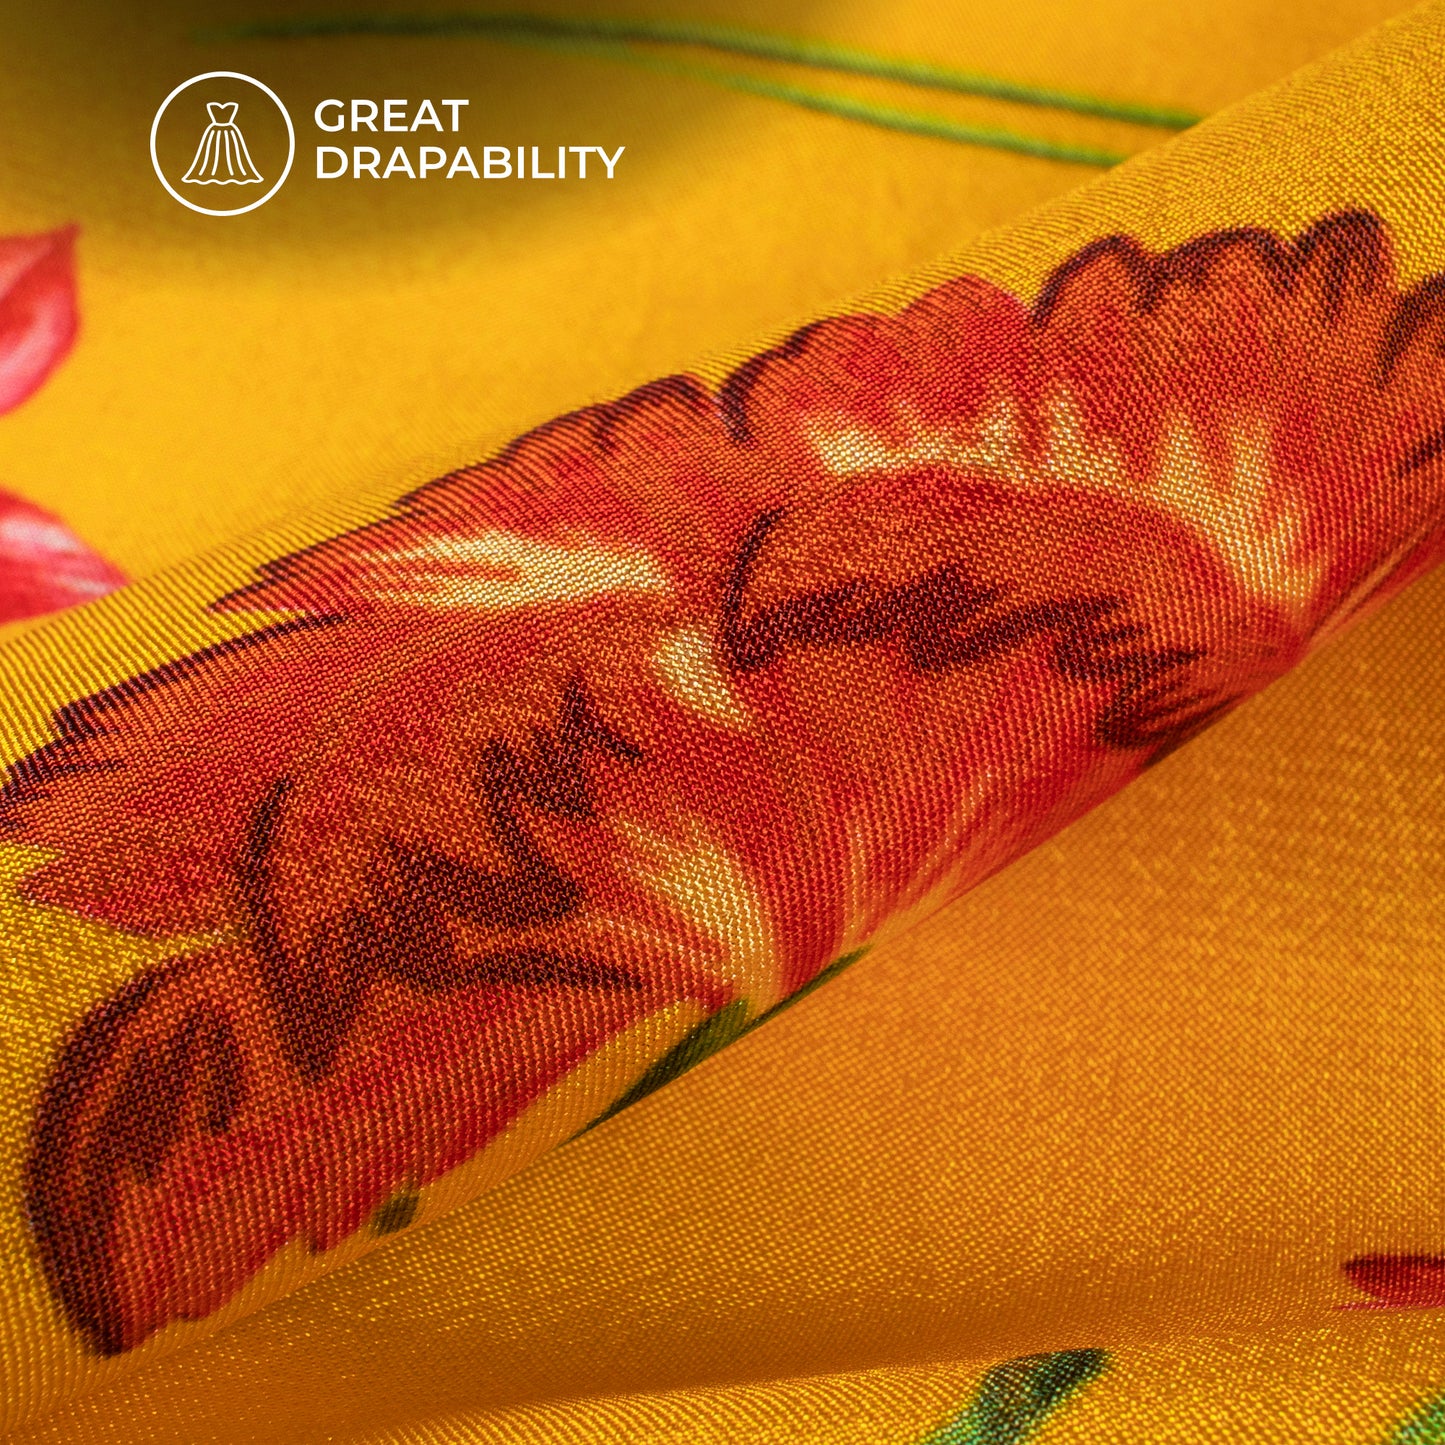 Dazzling Floral Digital Print Viscose Uppada Silk Fabric